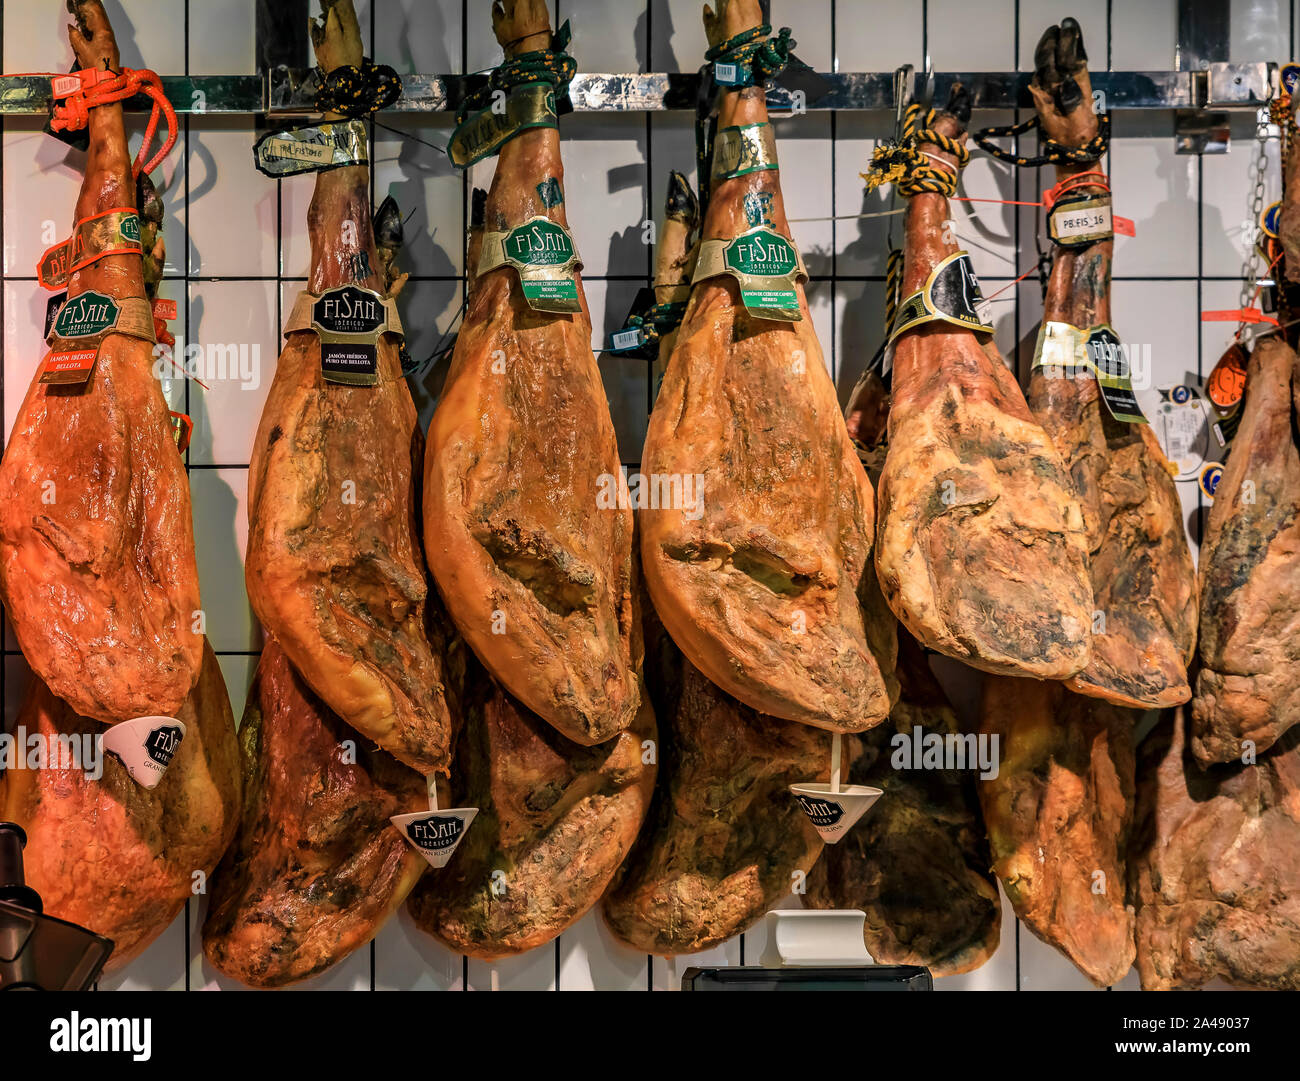 Madrid, Spain - June 4, 2017: Multiple whole bone-in legs of Spanish serrano iberico ham on display at a local market Stock Photo